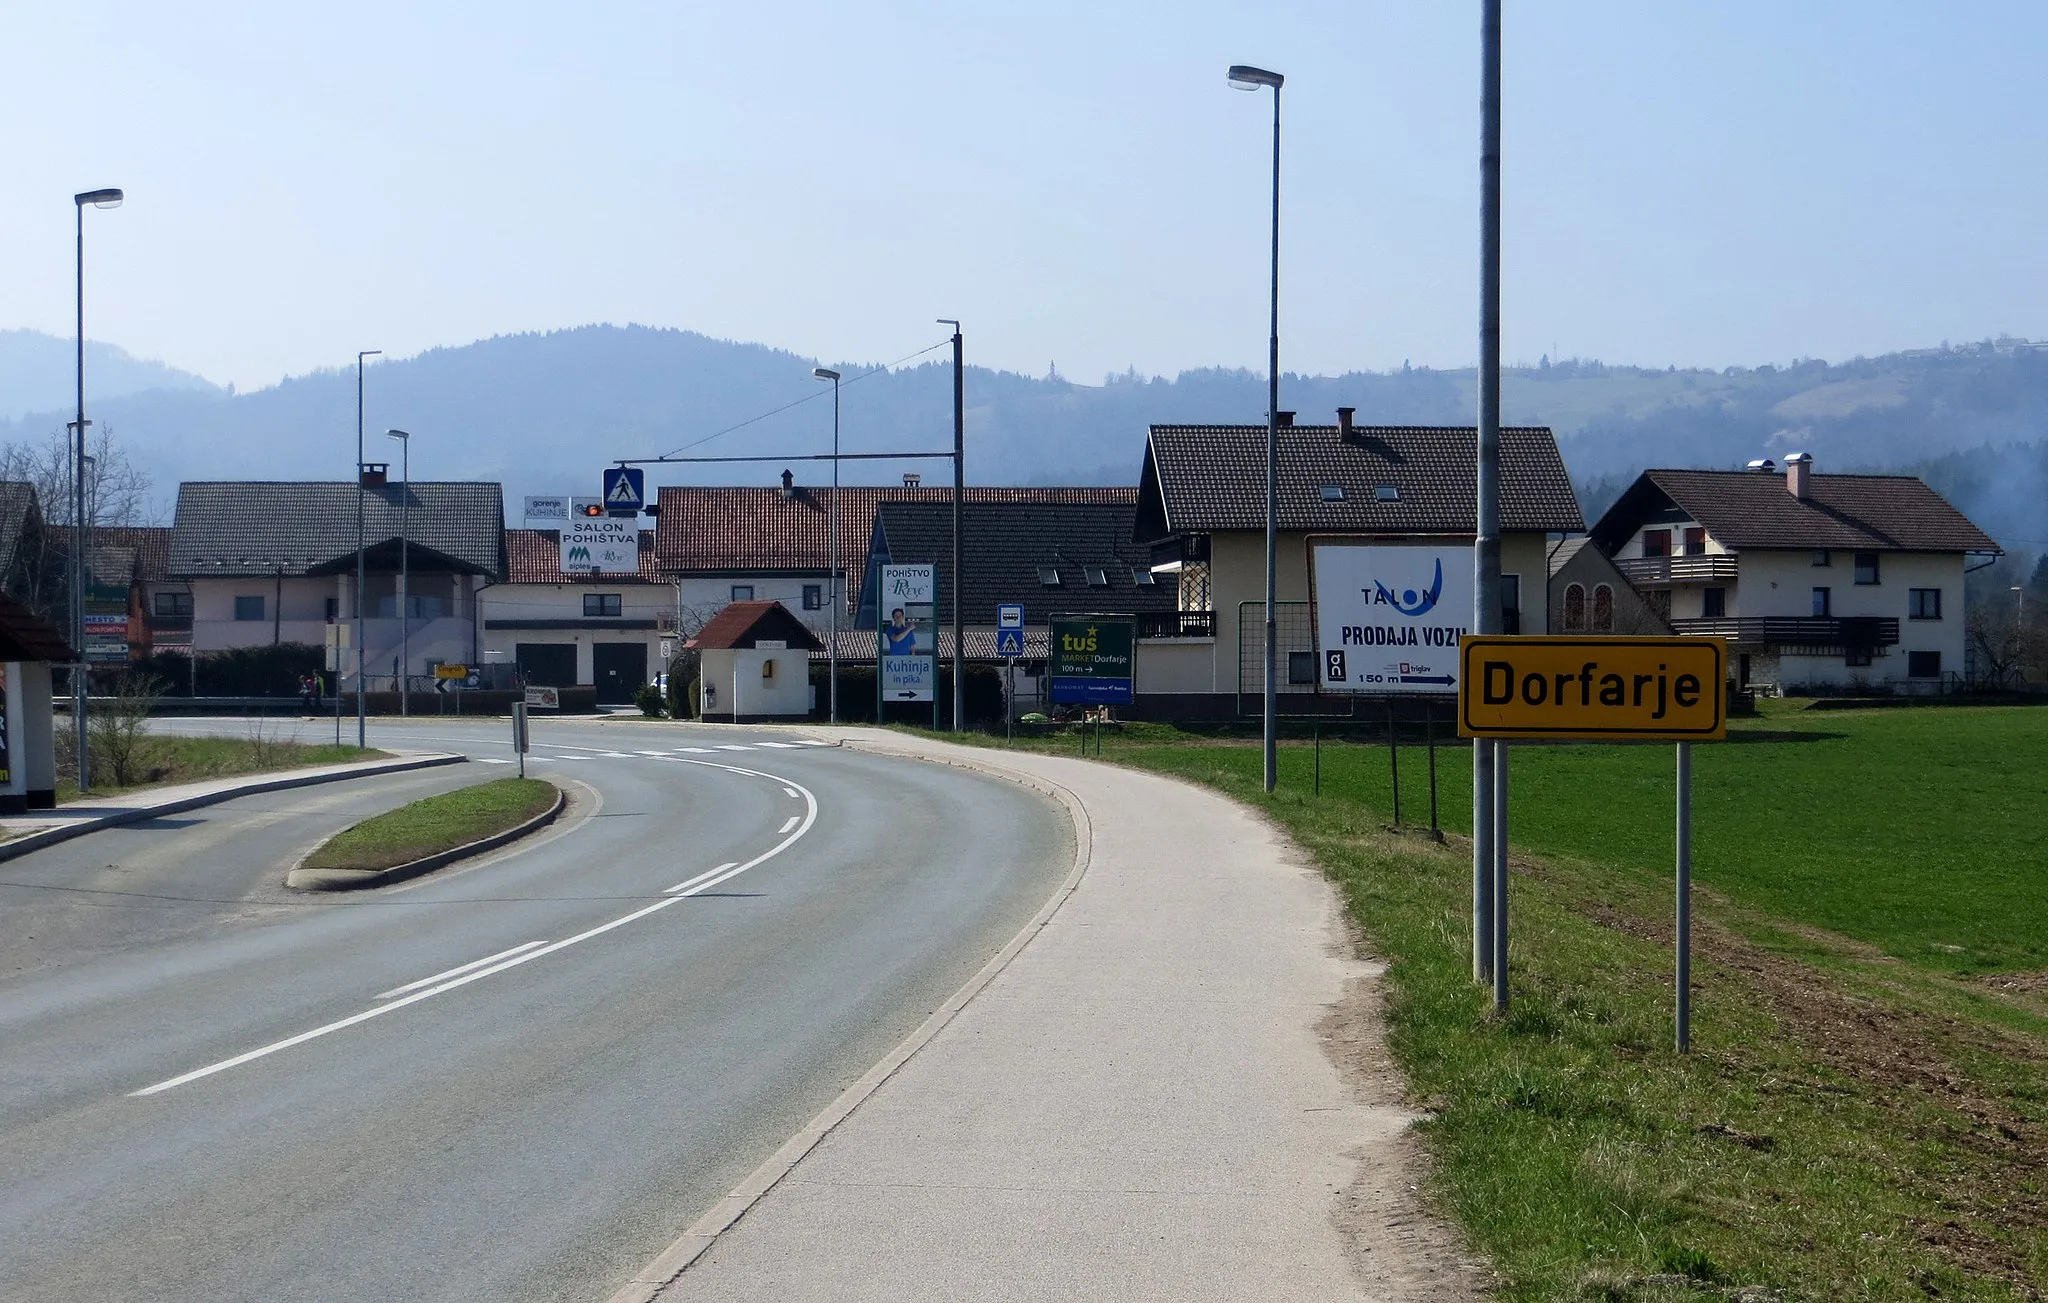 Photo showing: Dorfarje, Municipality of Škofja Loka, Slovenia